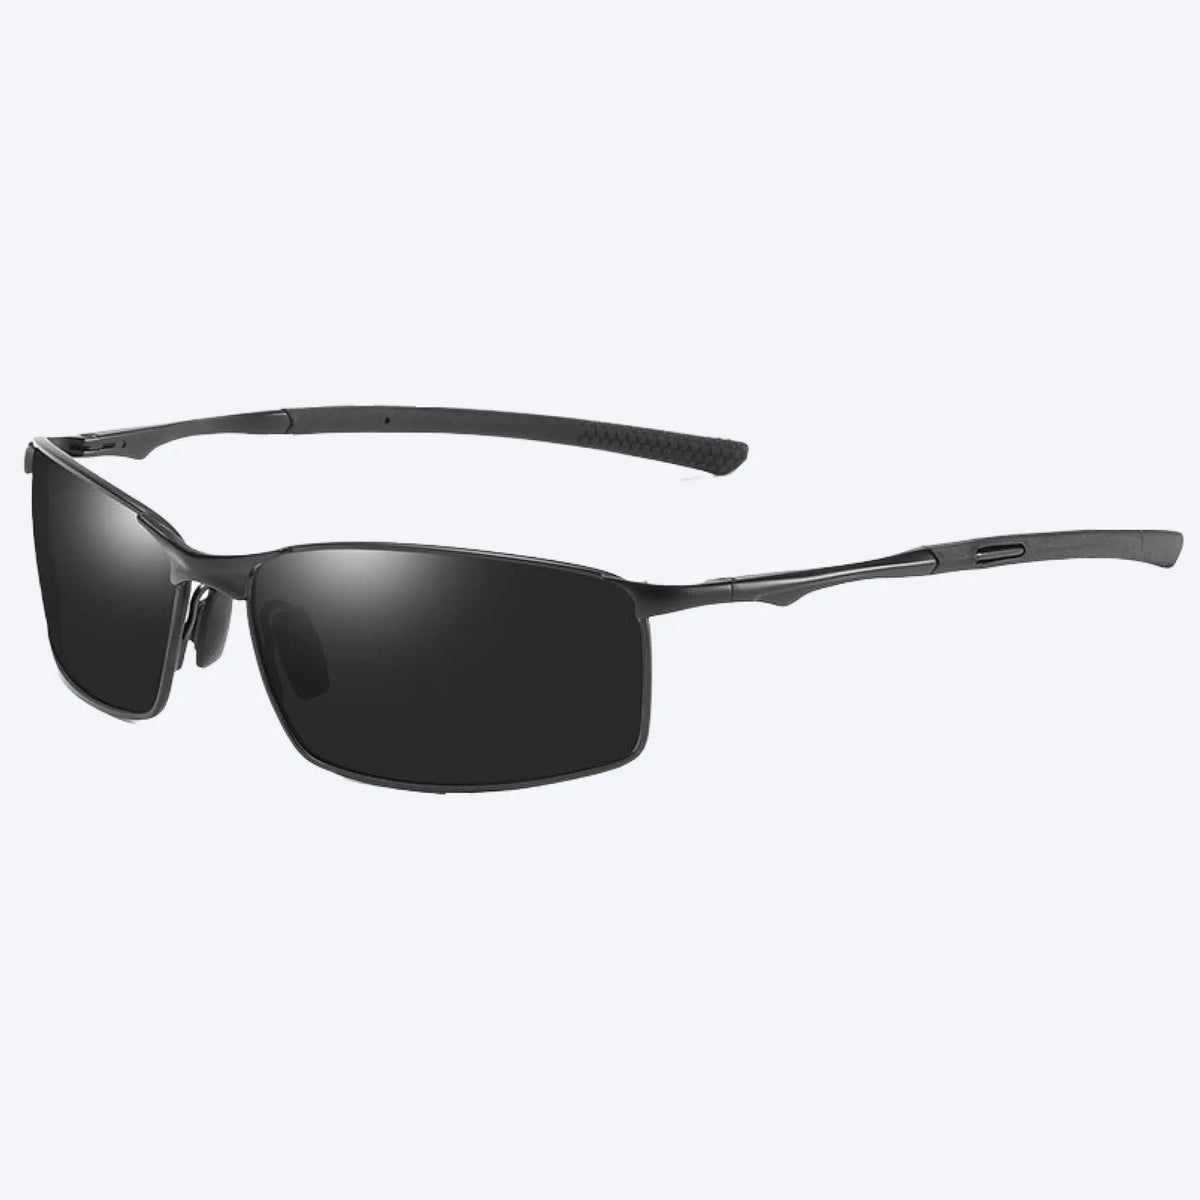 New Season Al-Mg Sport Men Polarized Sunglasses Ultra Light UV Protection  Shades For Driving Cycling Fishing Golf (Black Gray)